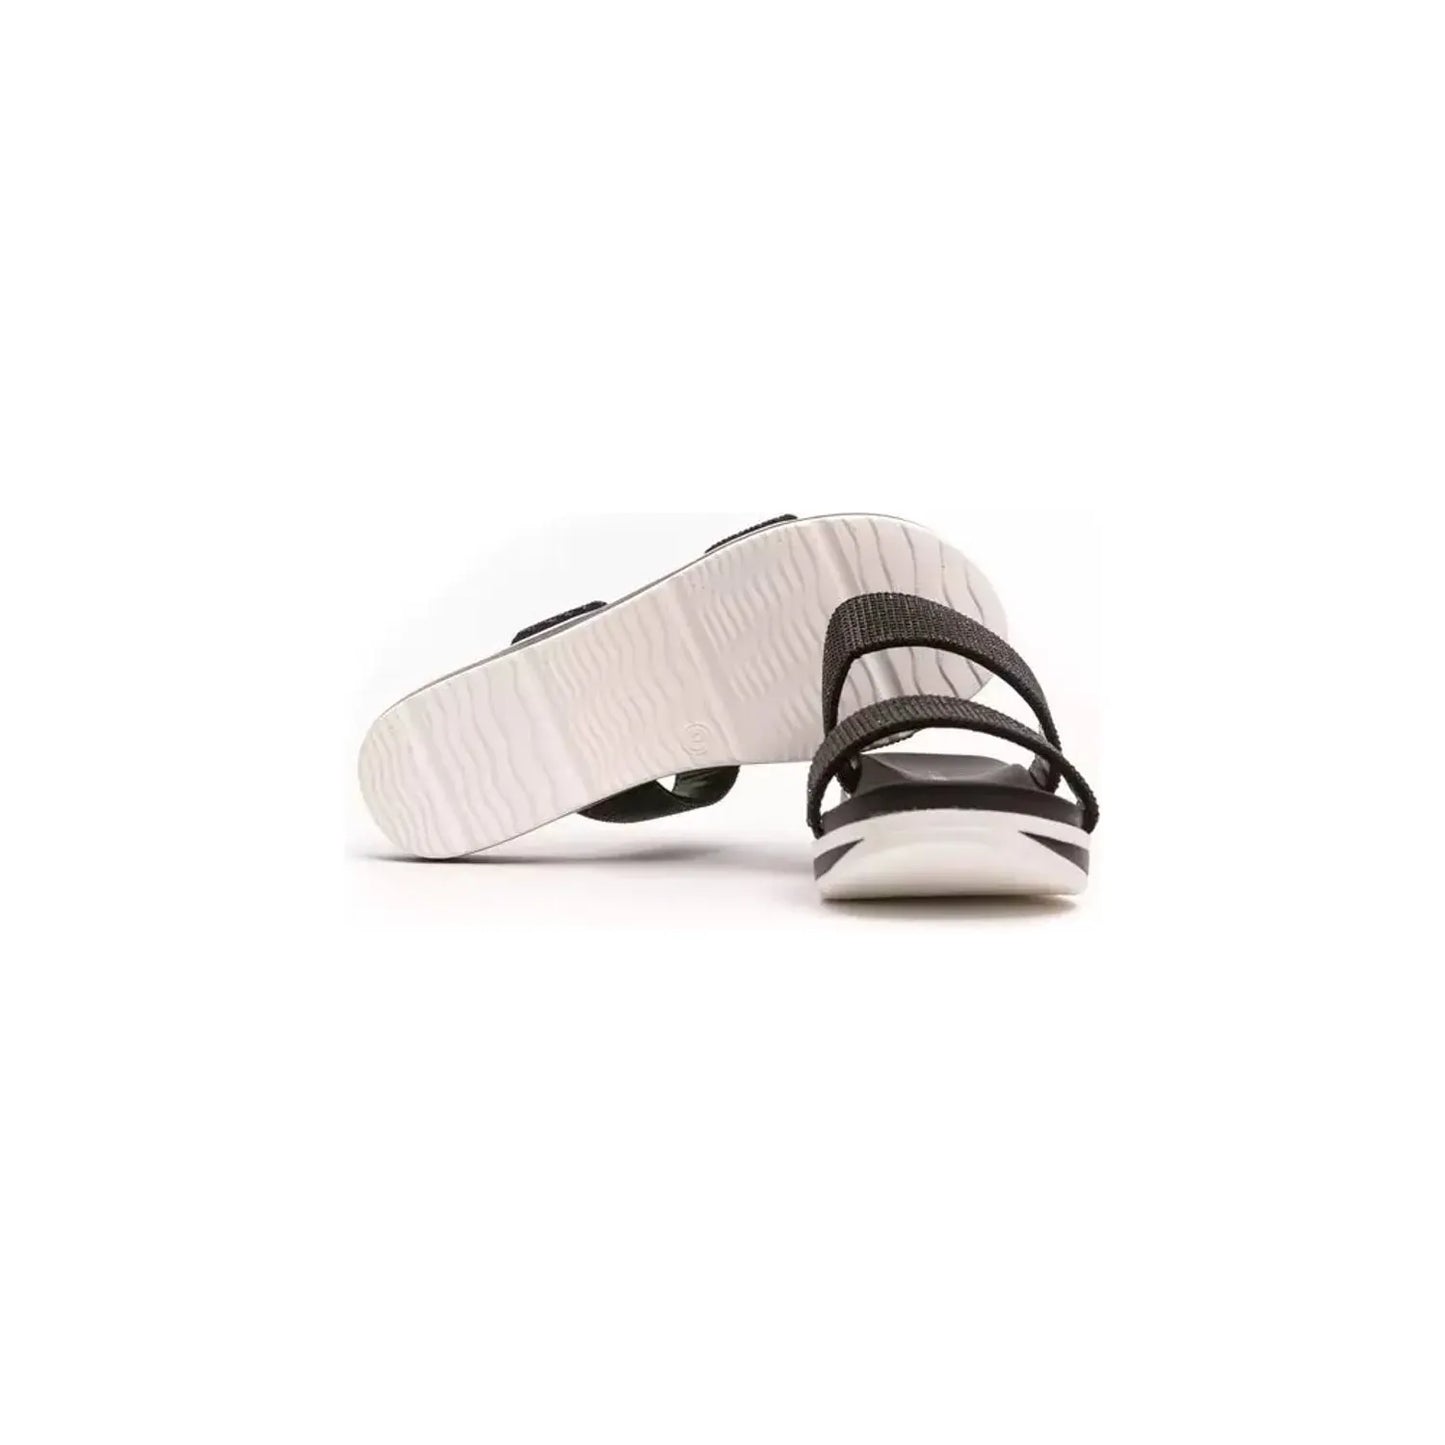 Péché Originel Chic Rhinestone Twin-Strap Low Sandals black-polyurethane-sandal